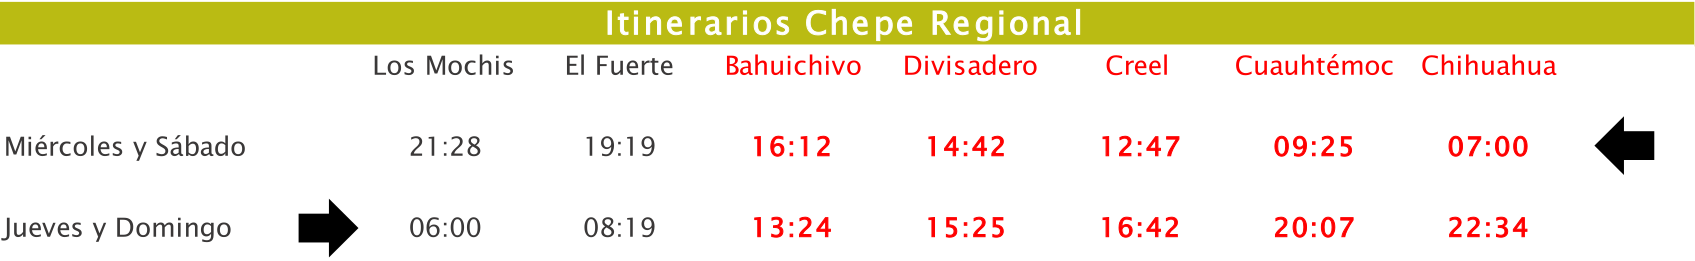 Itinerario Chepe Regional